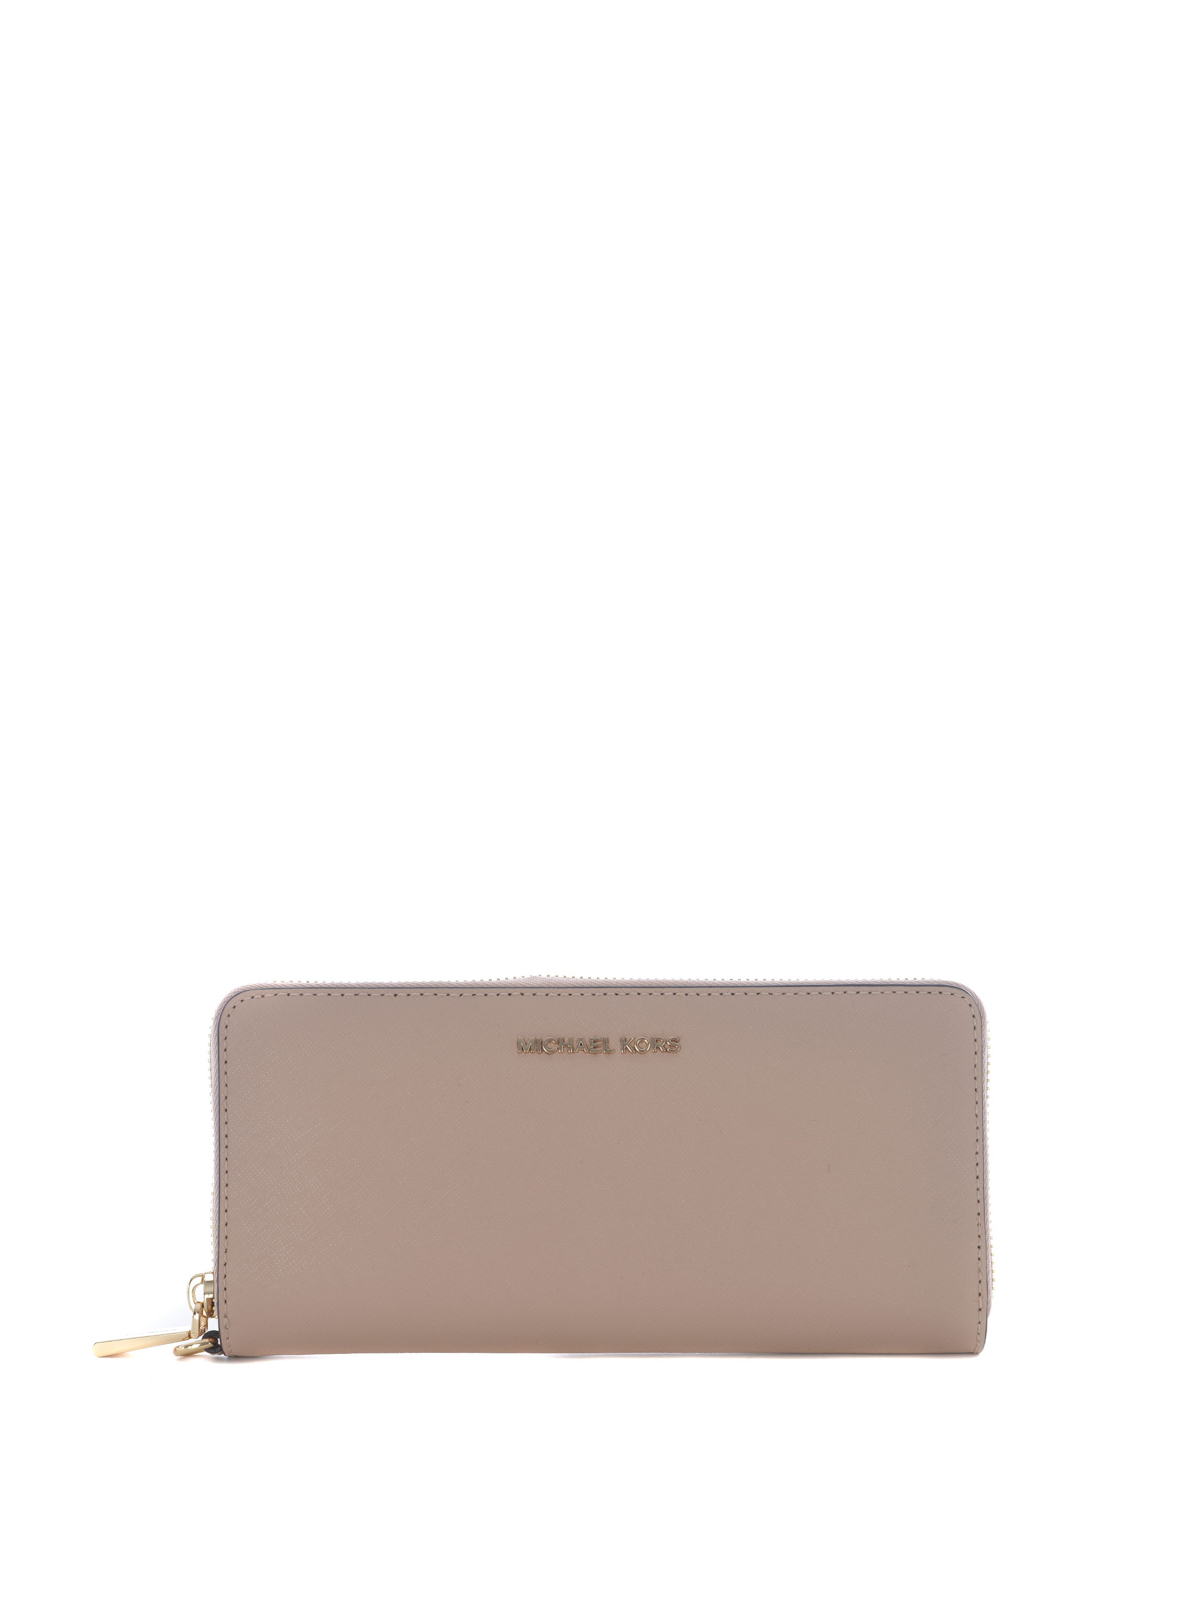 Wallets & purses Michael Kors - Jet Set Travel pink leather wallet -  32S5GTVE9L134